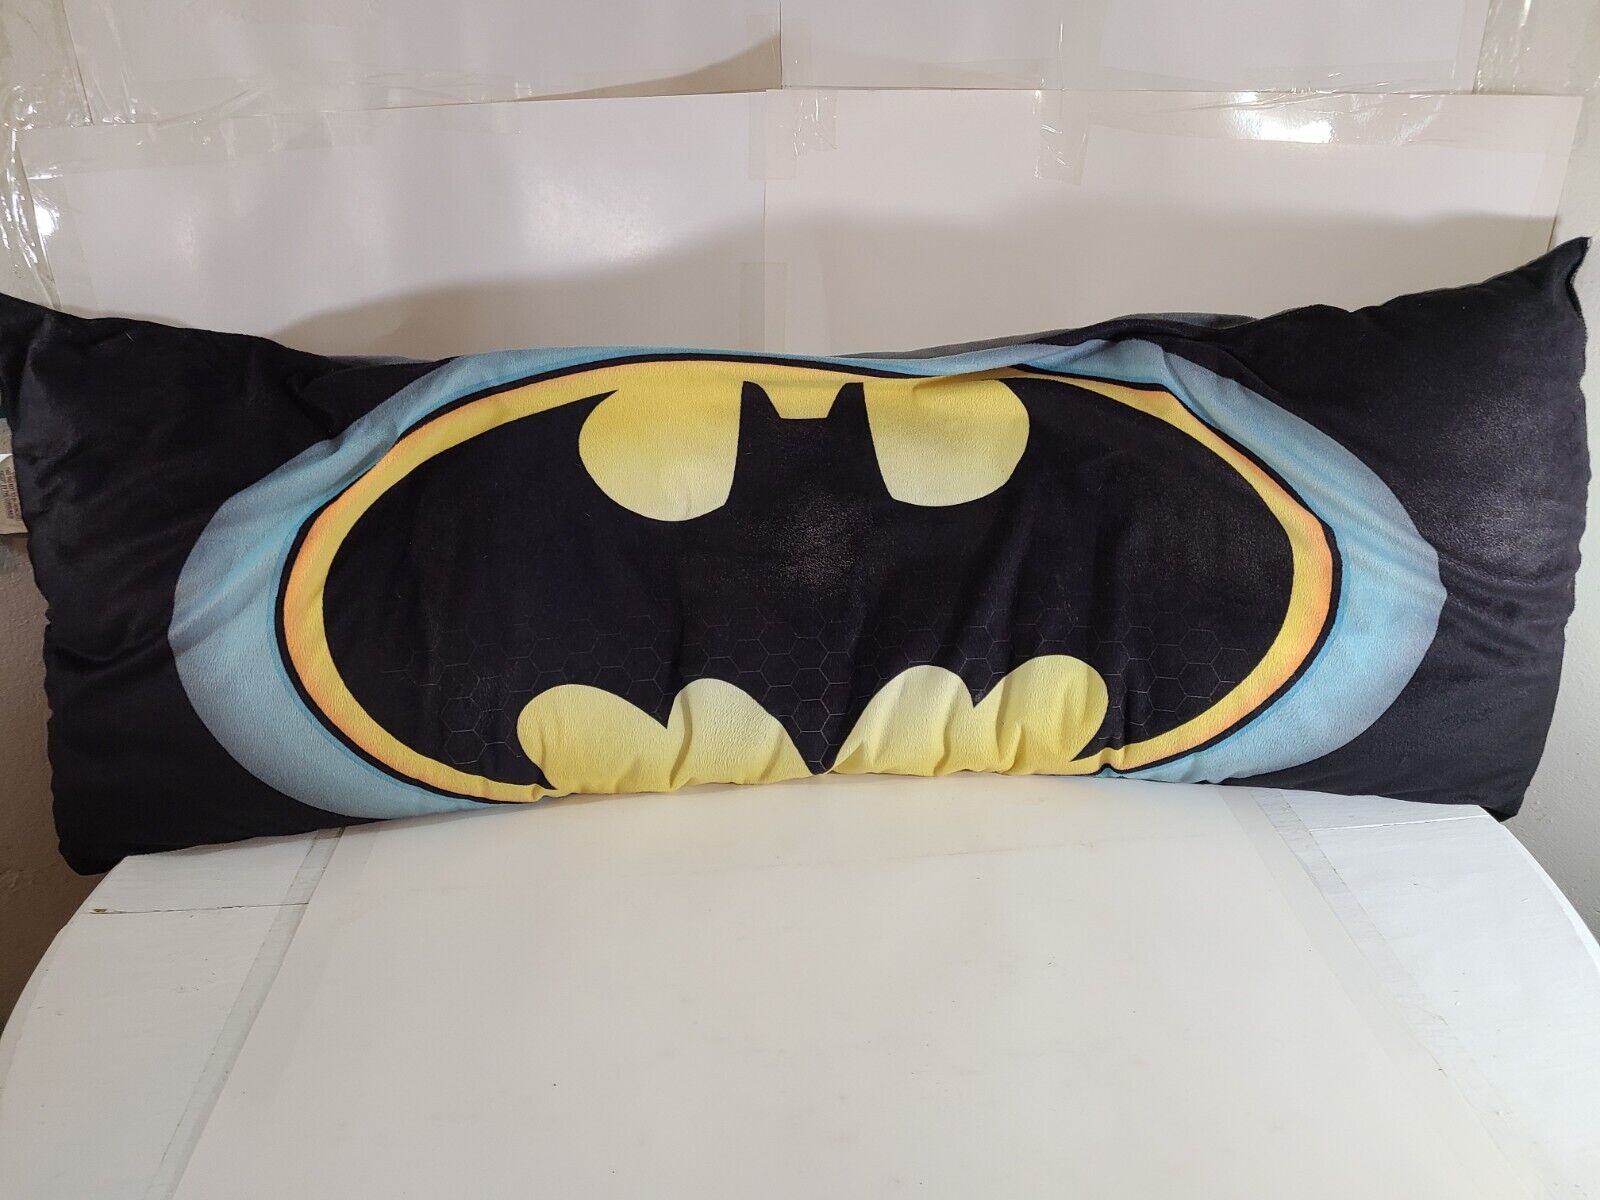 48 x 16 inch plush stuffed Batman body pillow, by DC Comics, good condition